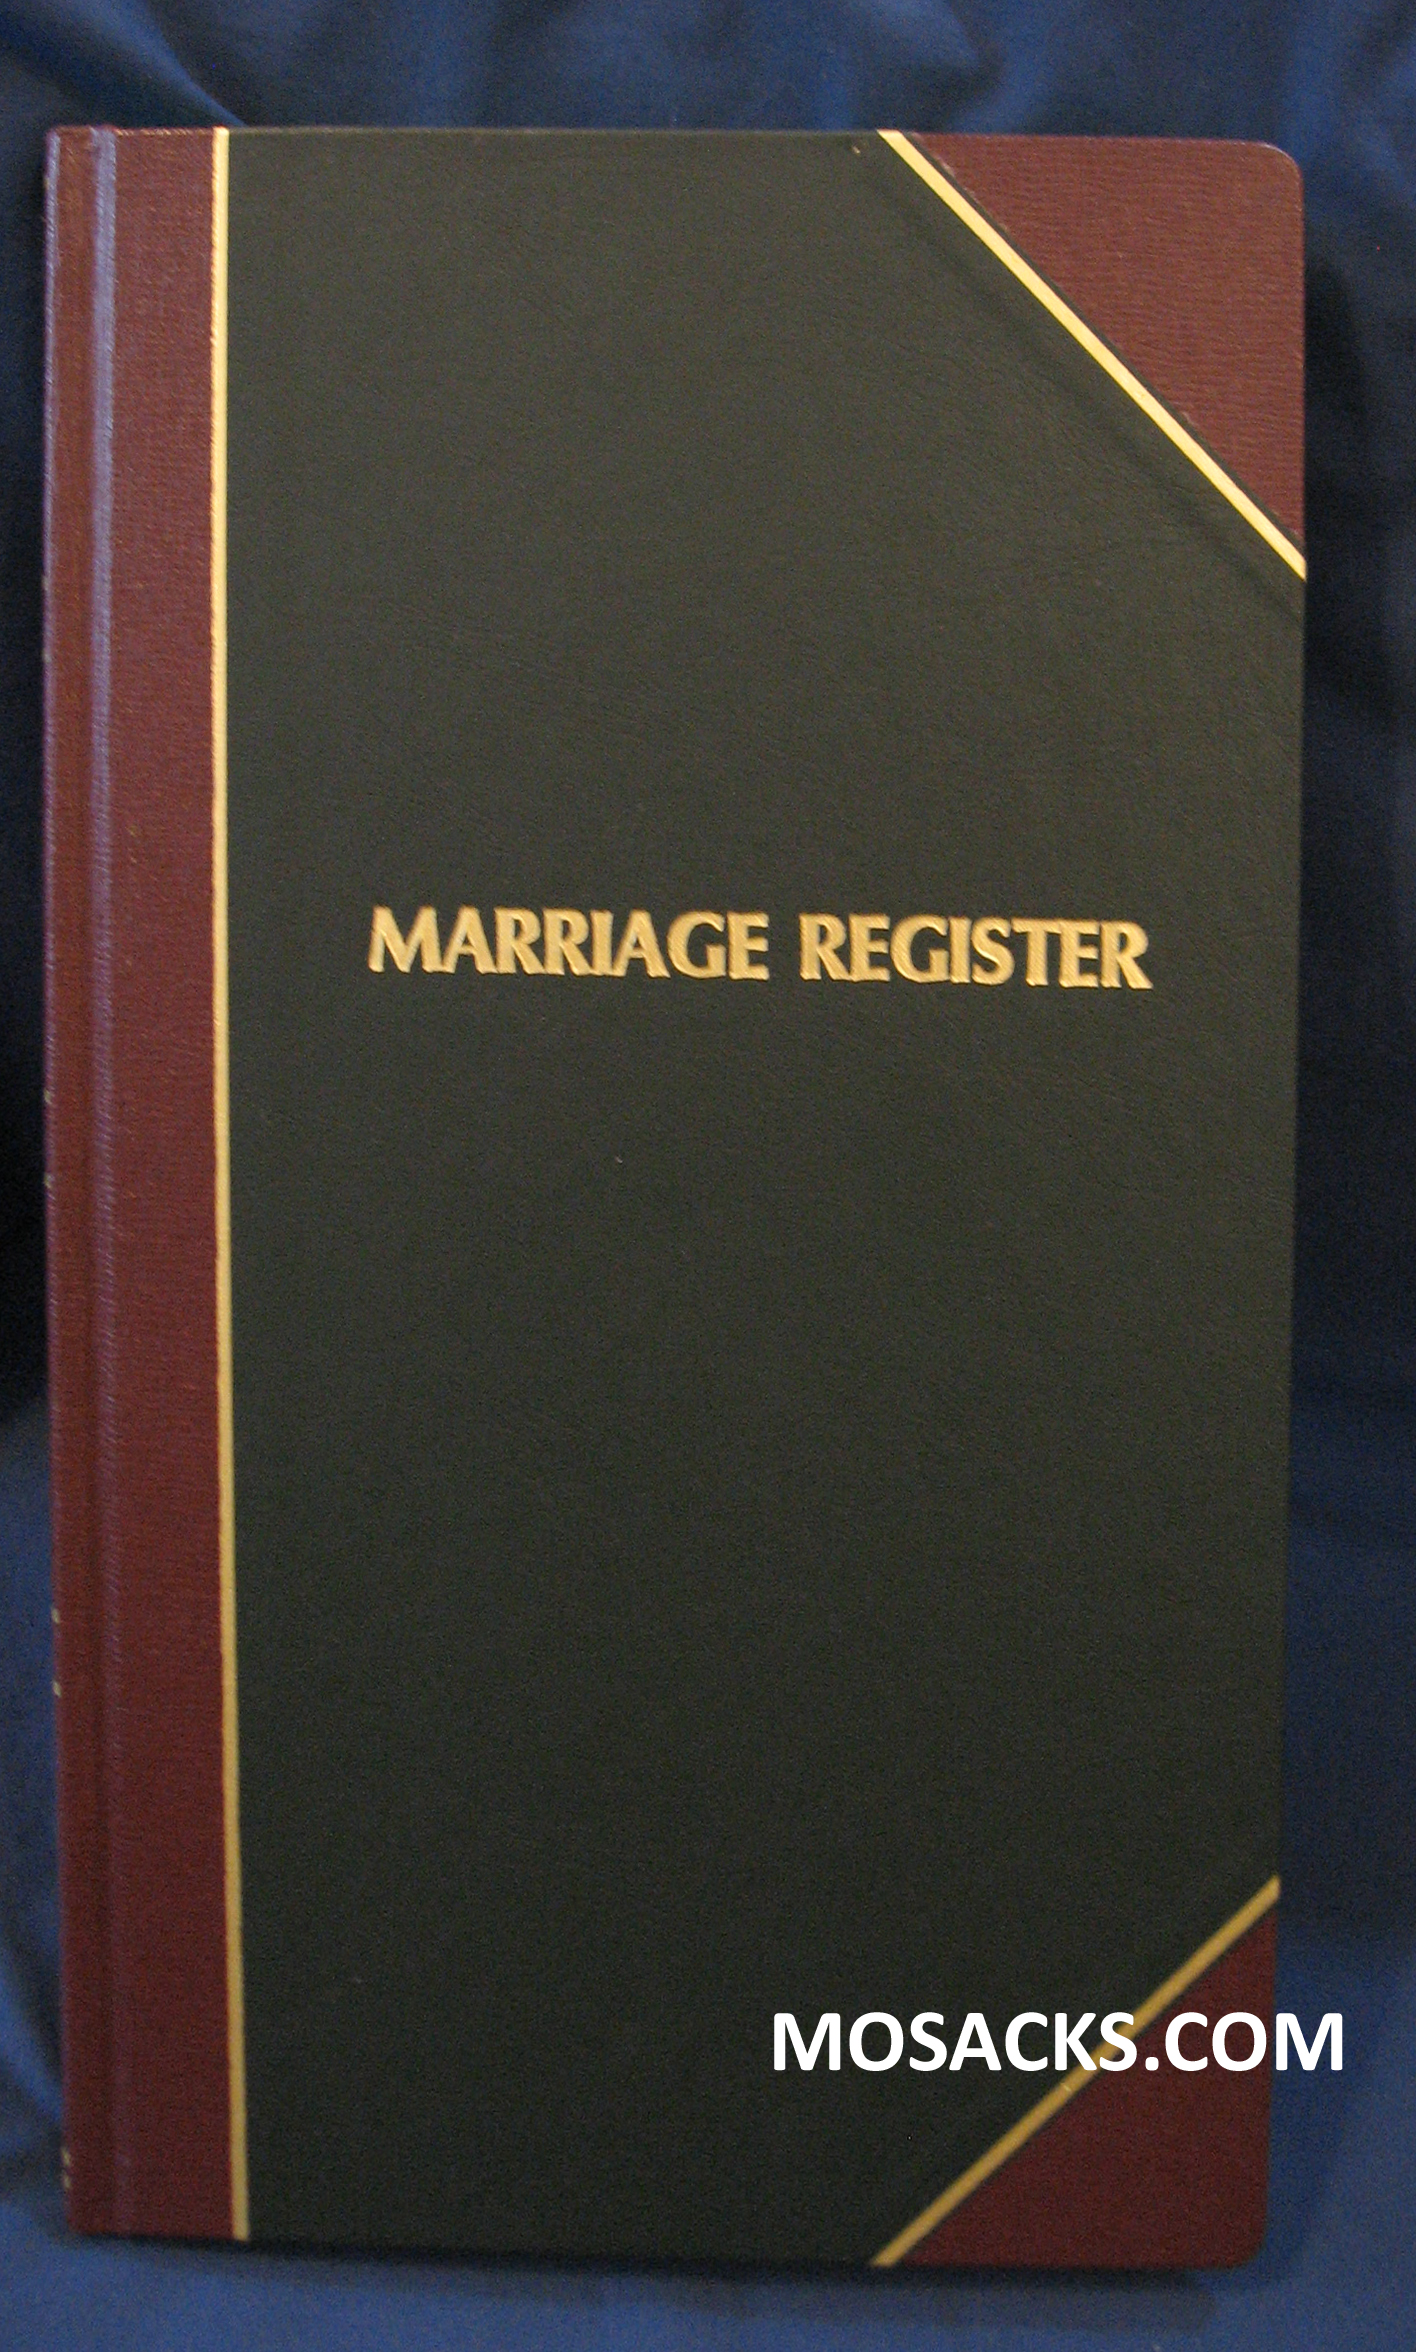 Standard Marriage Register No. 101